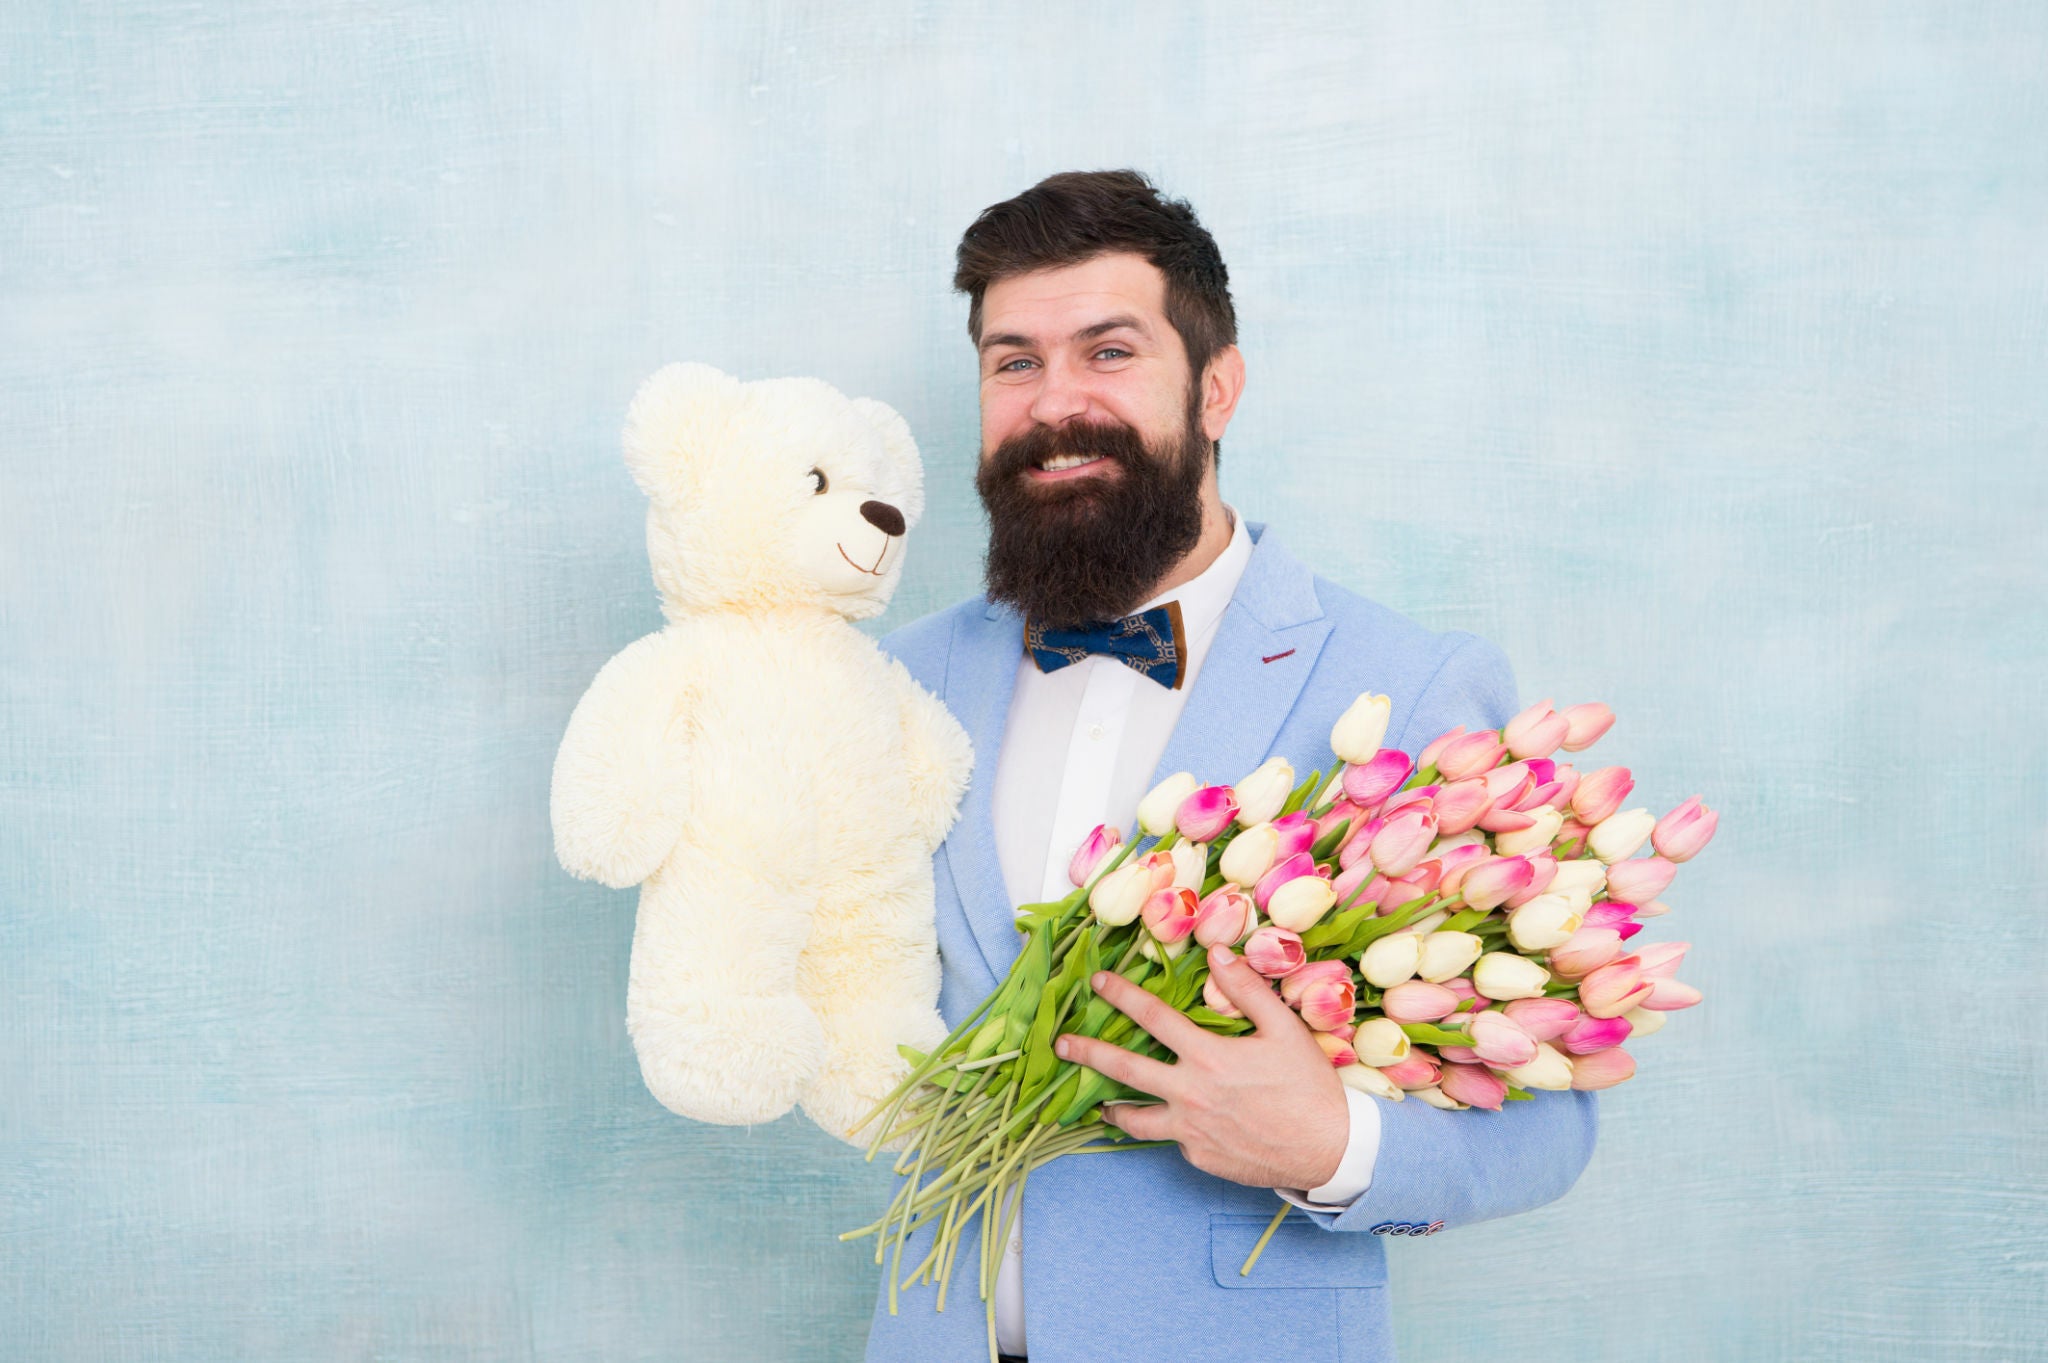 Flowers Bouquet with Teddy Bears Birthday Gift Ideas for Wife in Dubai